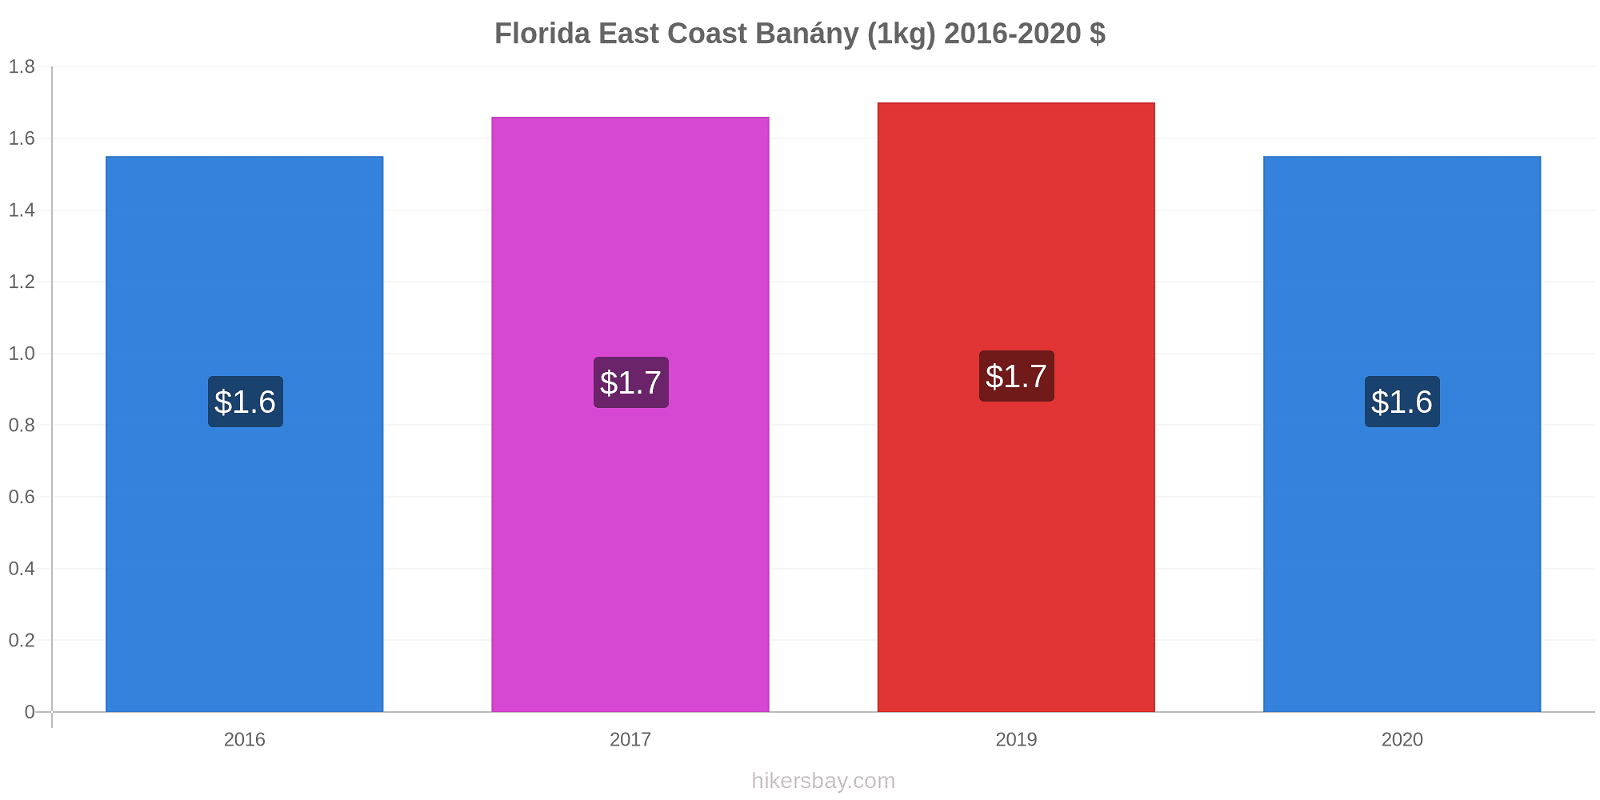 Florida East Coast změny cen Banány (1kg) hikersbay.com